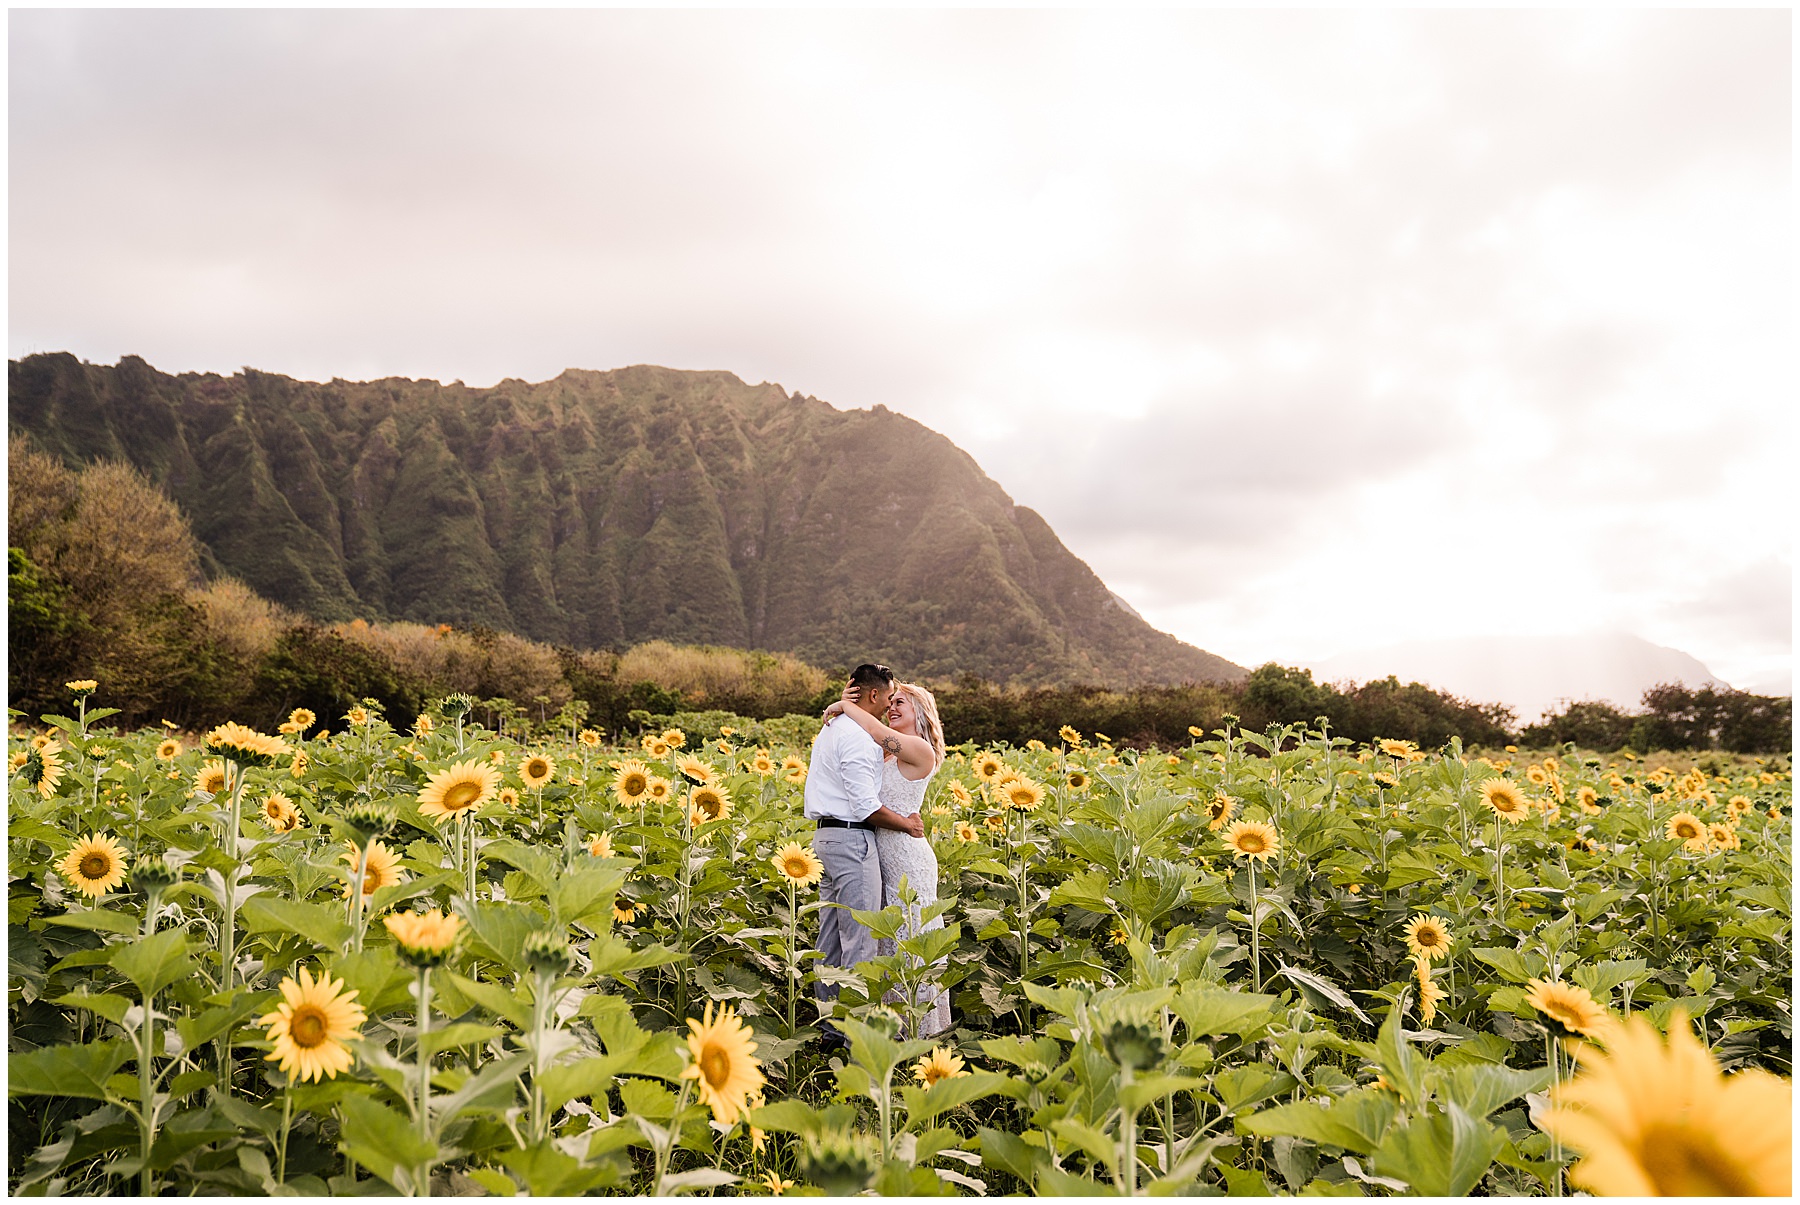 couple taking wedding photos in sunflower field